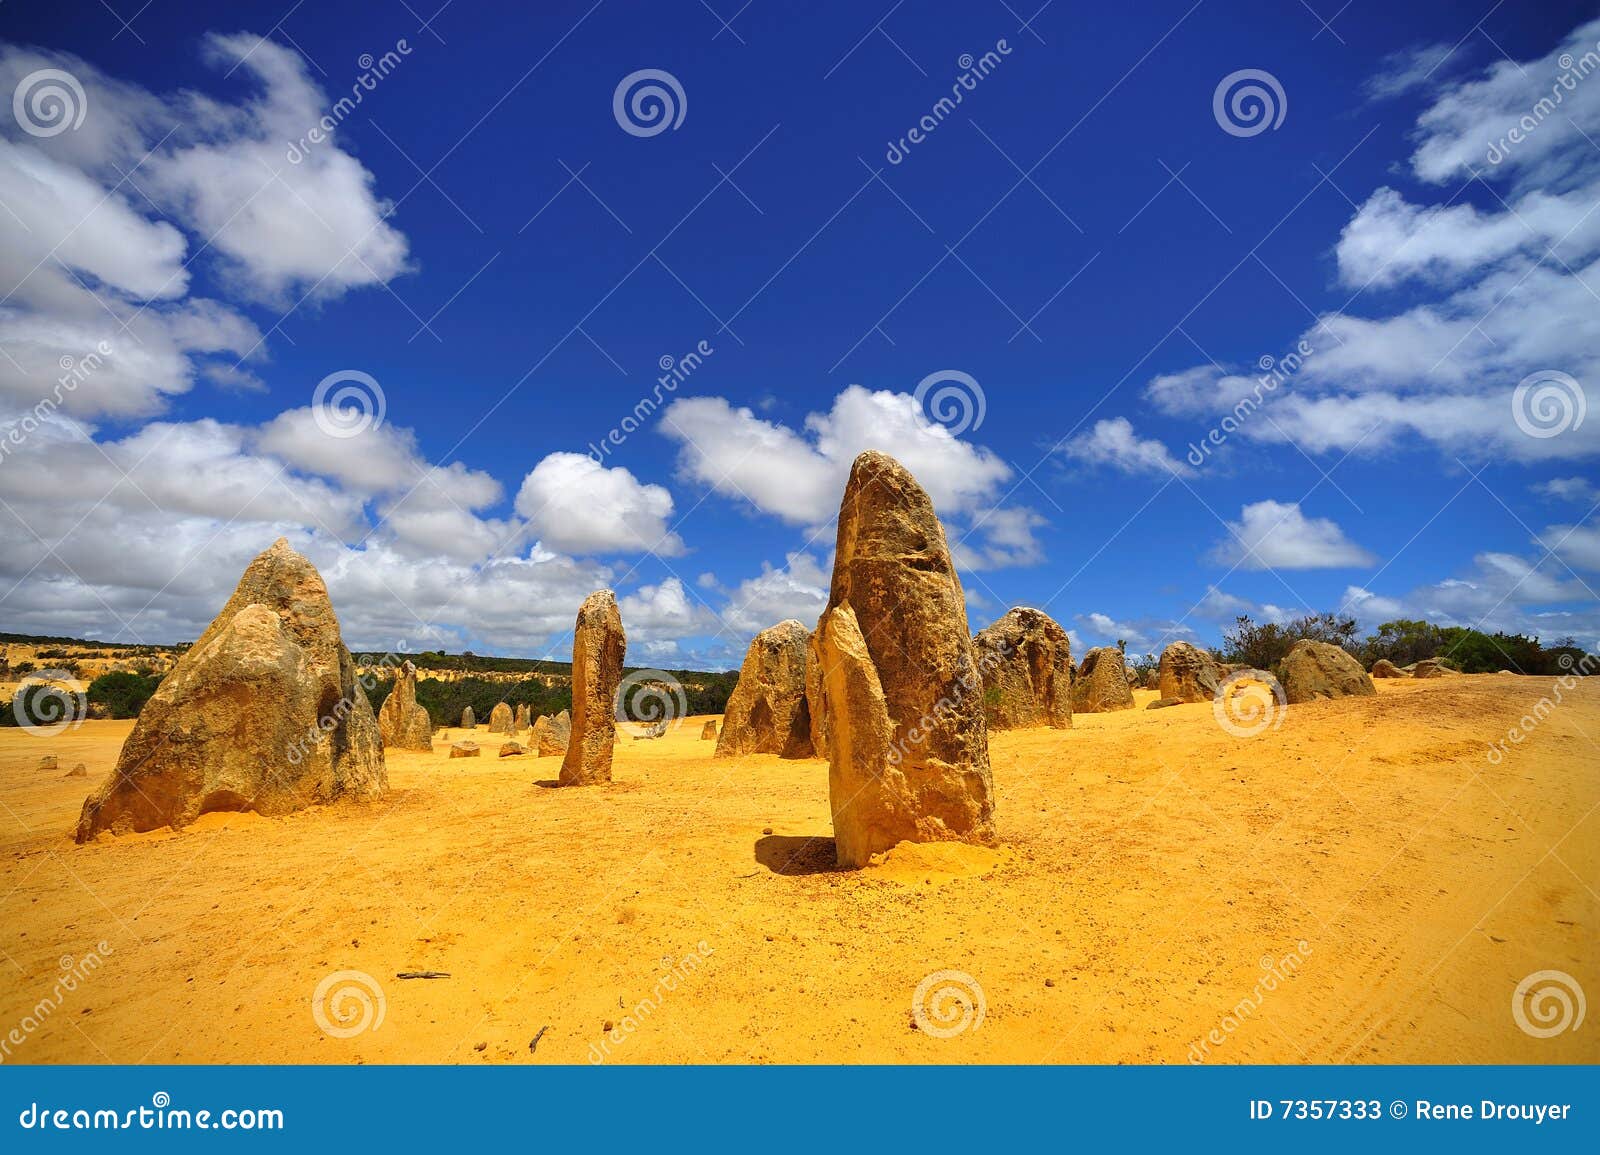 australia: pinnacles desert